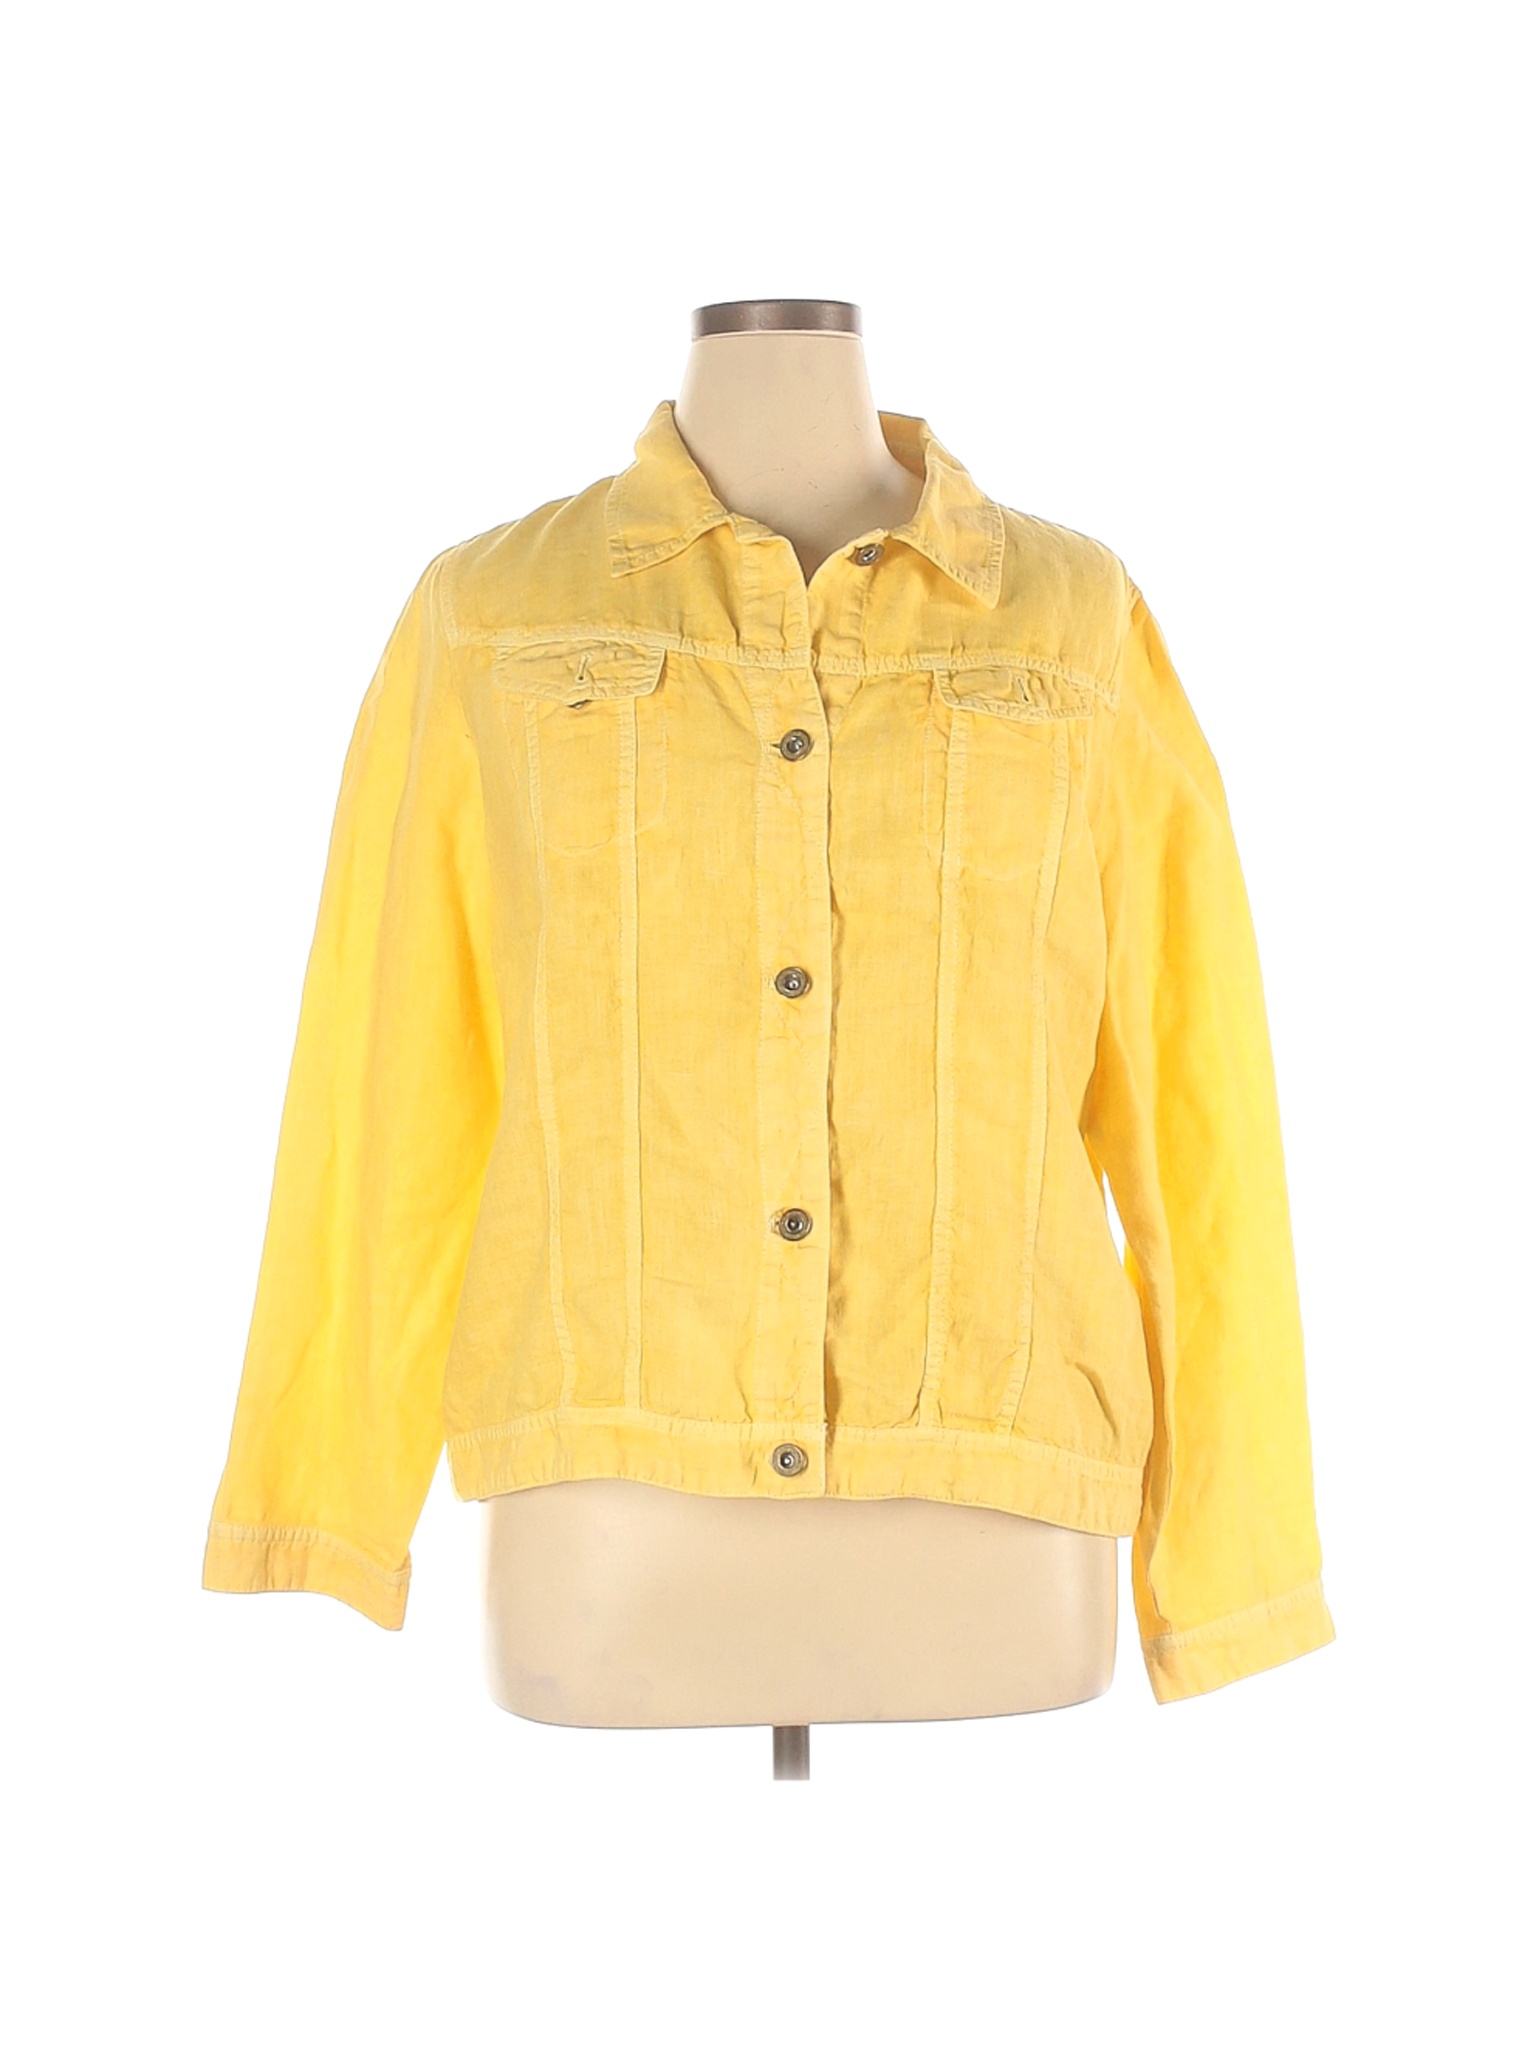 Chico's Women Yellow Jacket XL | eBay